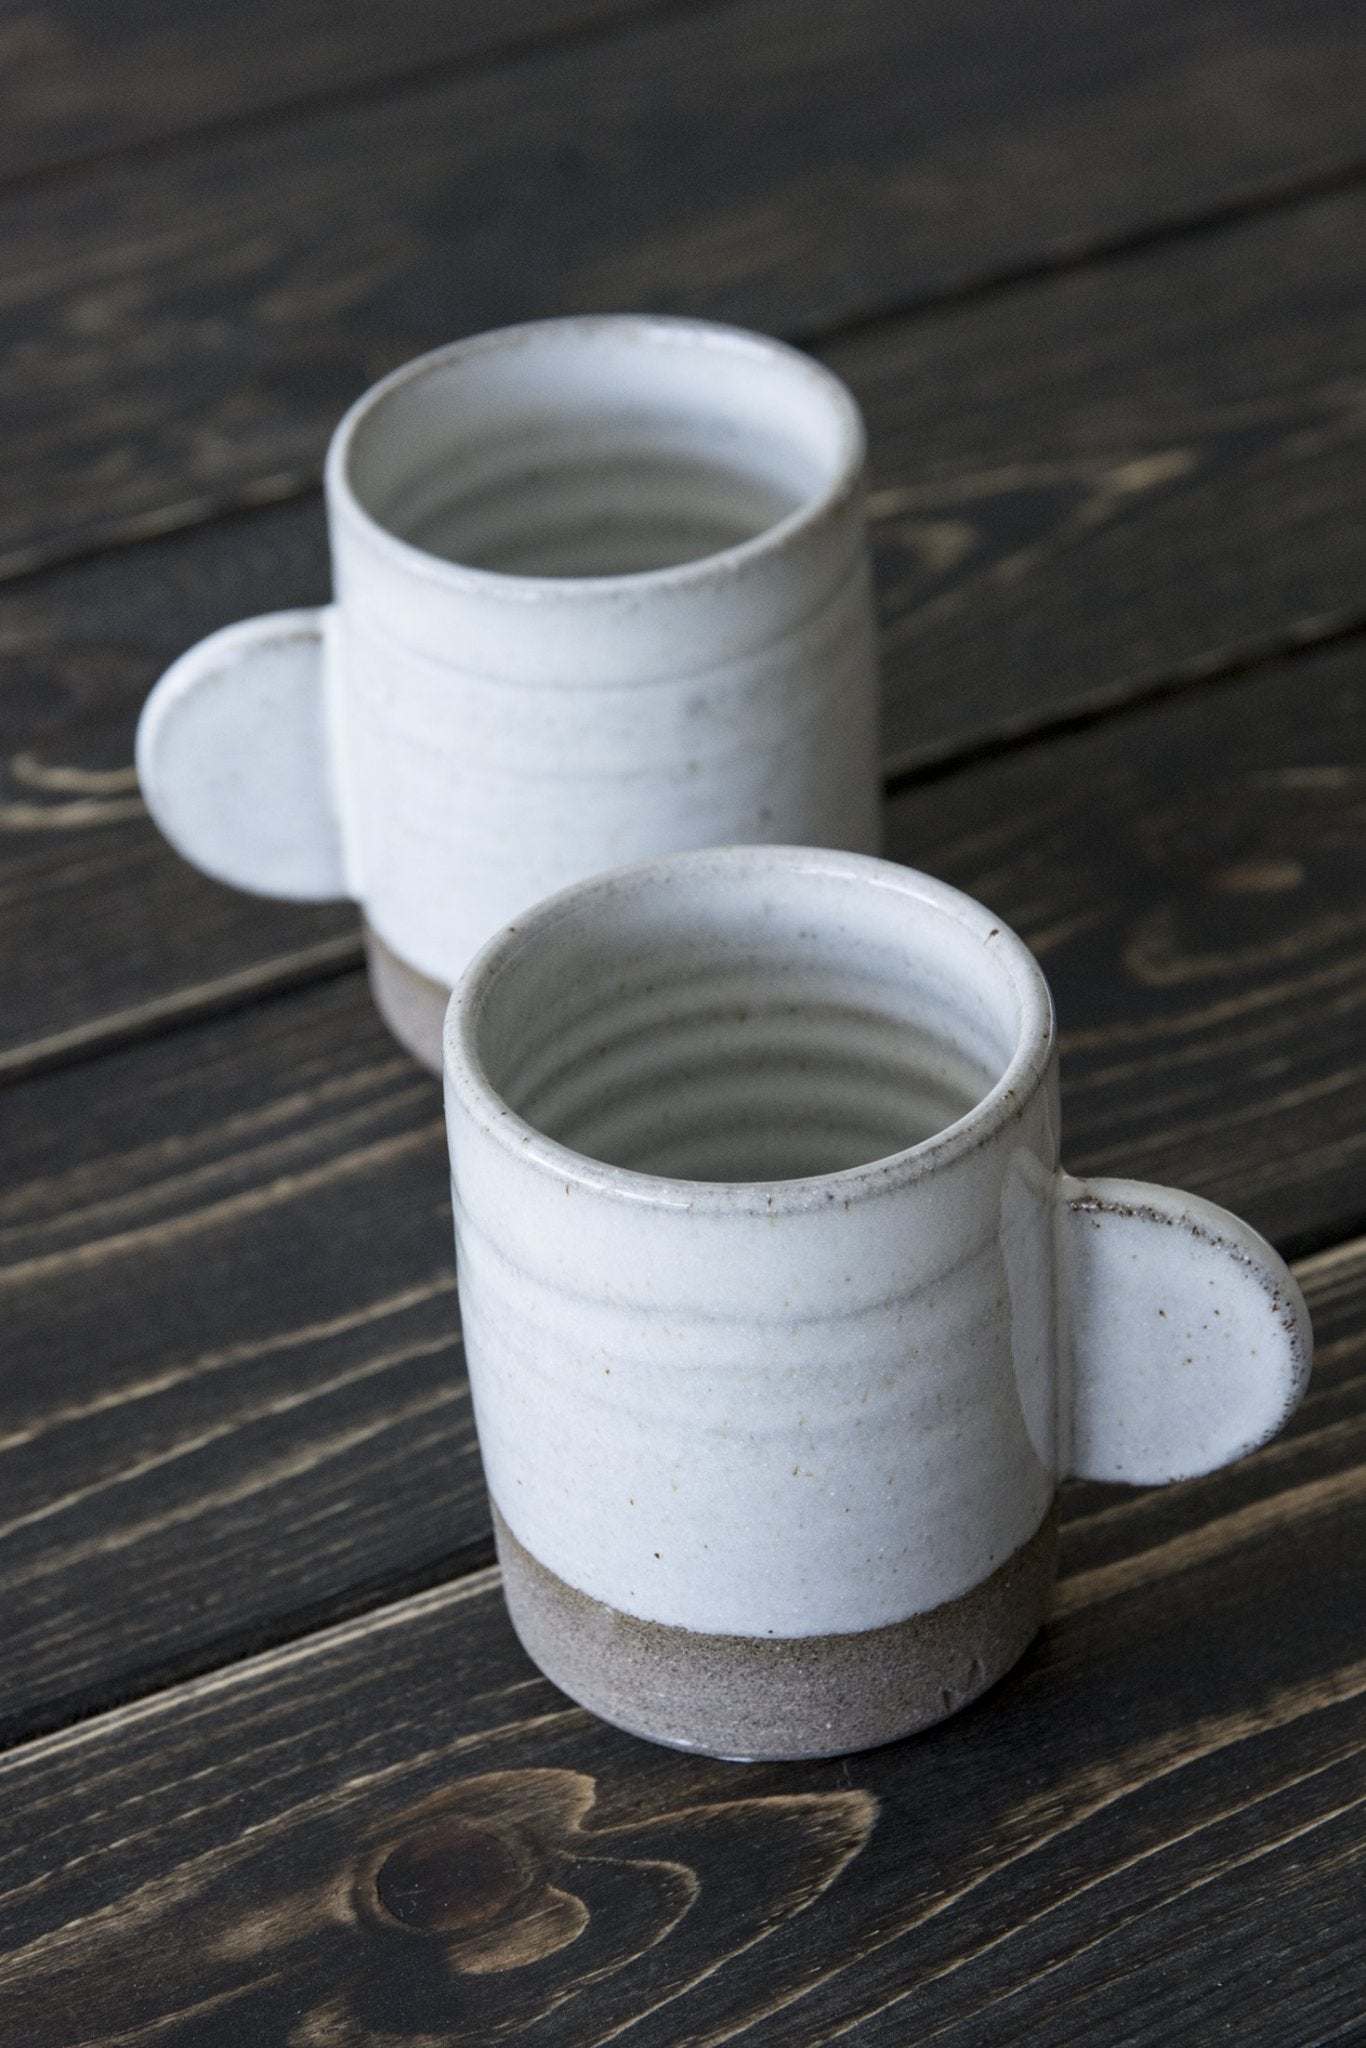 PACIFICA 4 oz Marble Ceramic Espresso Cups - Set of 4 Modern, Blue